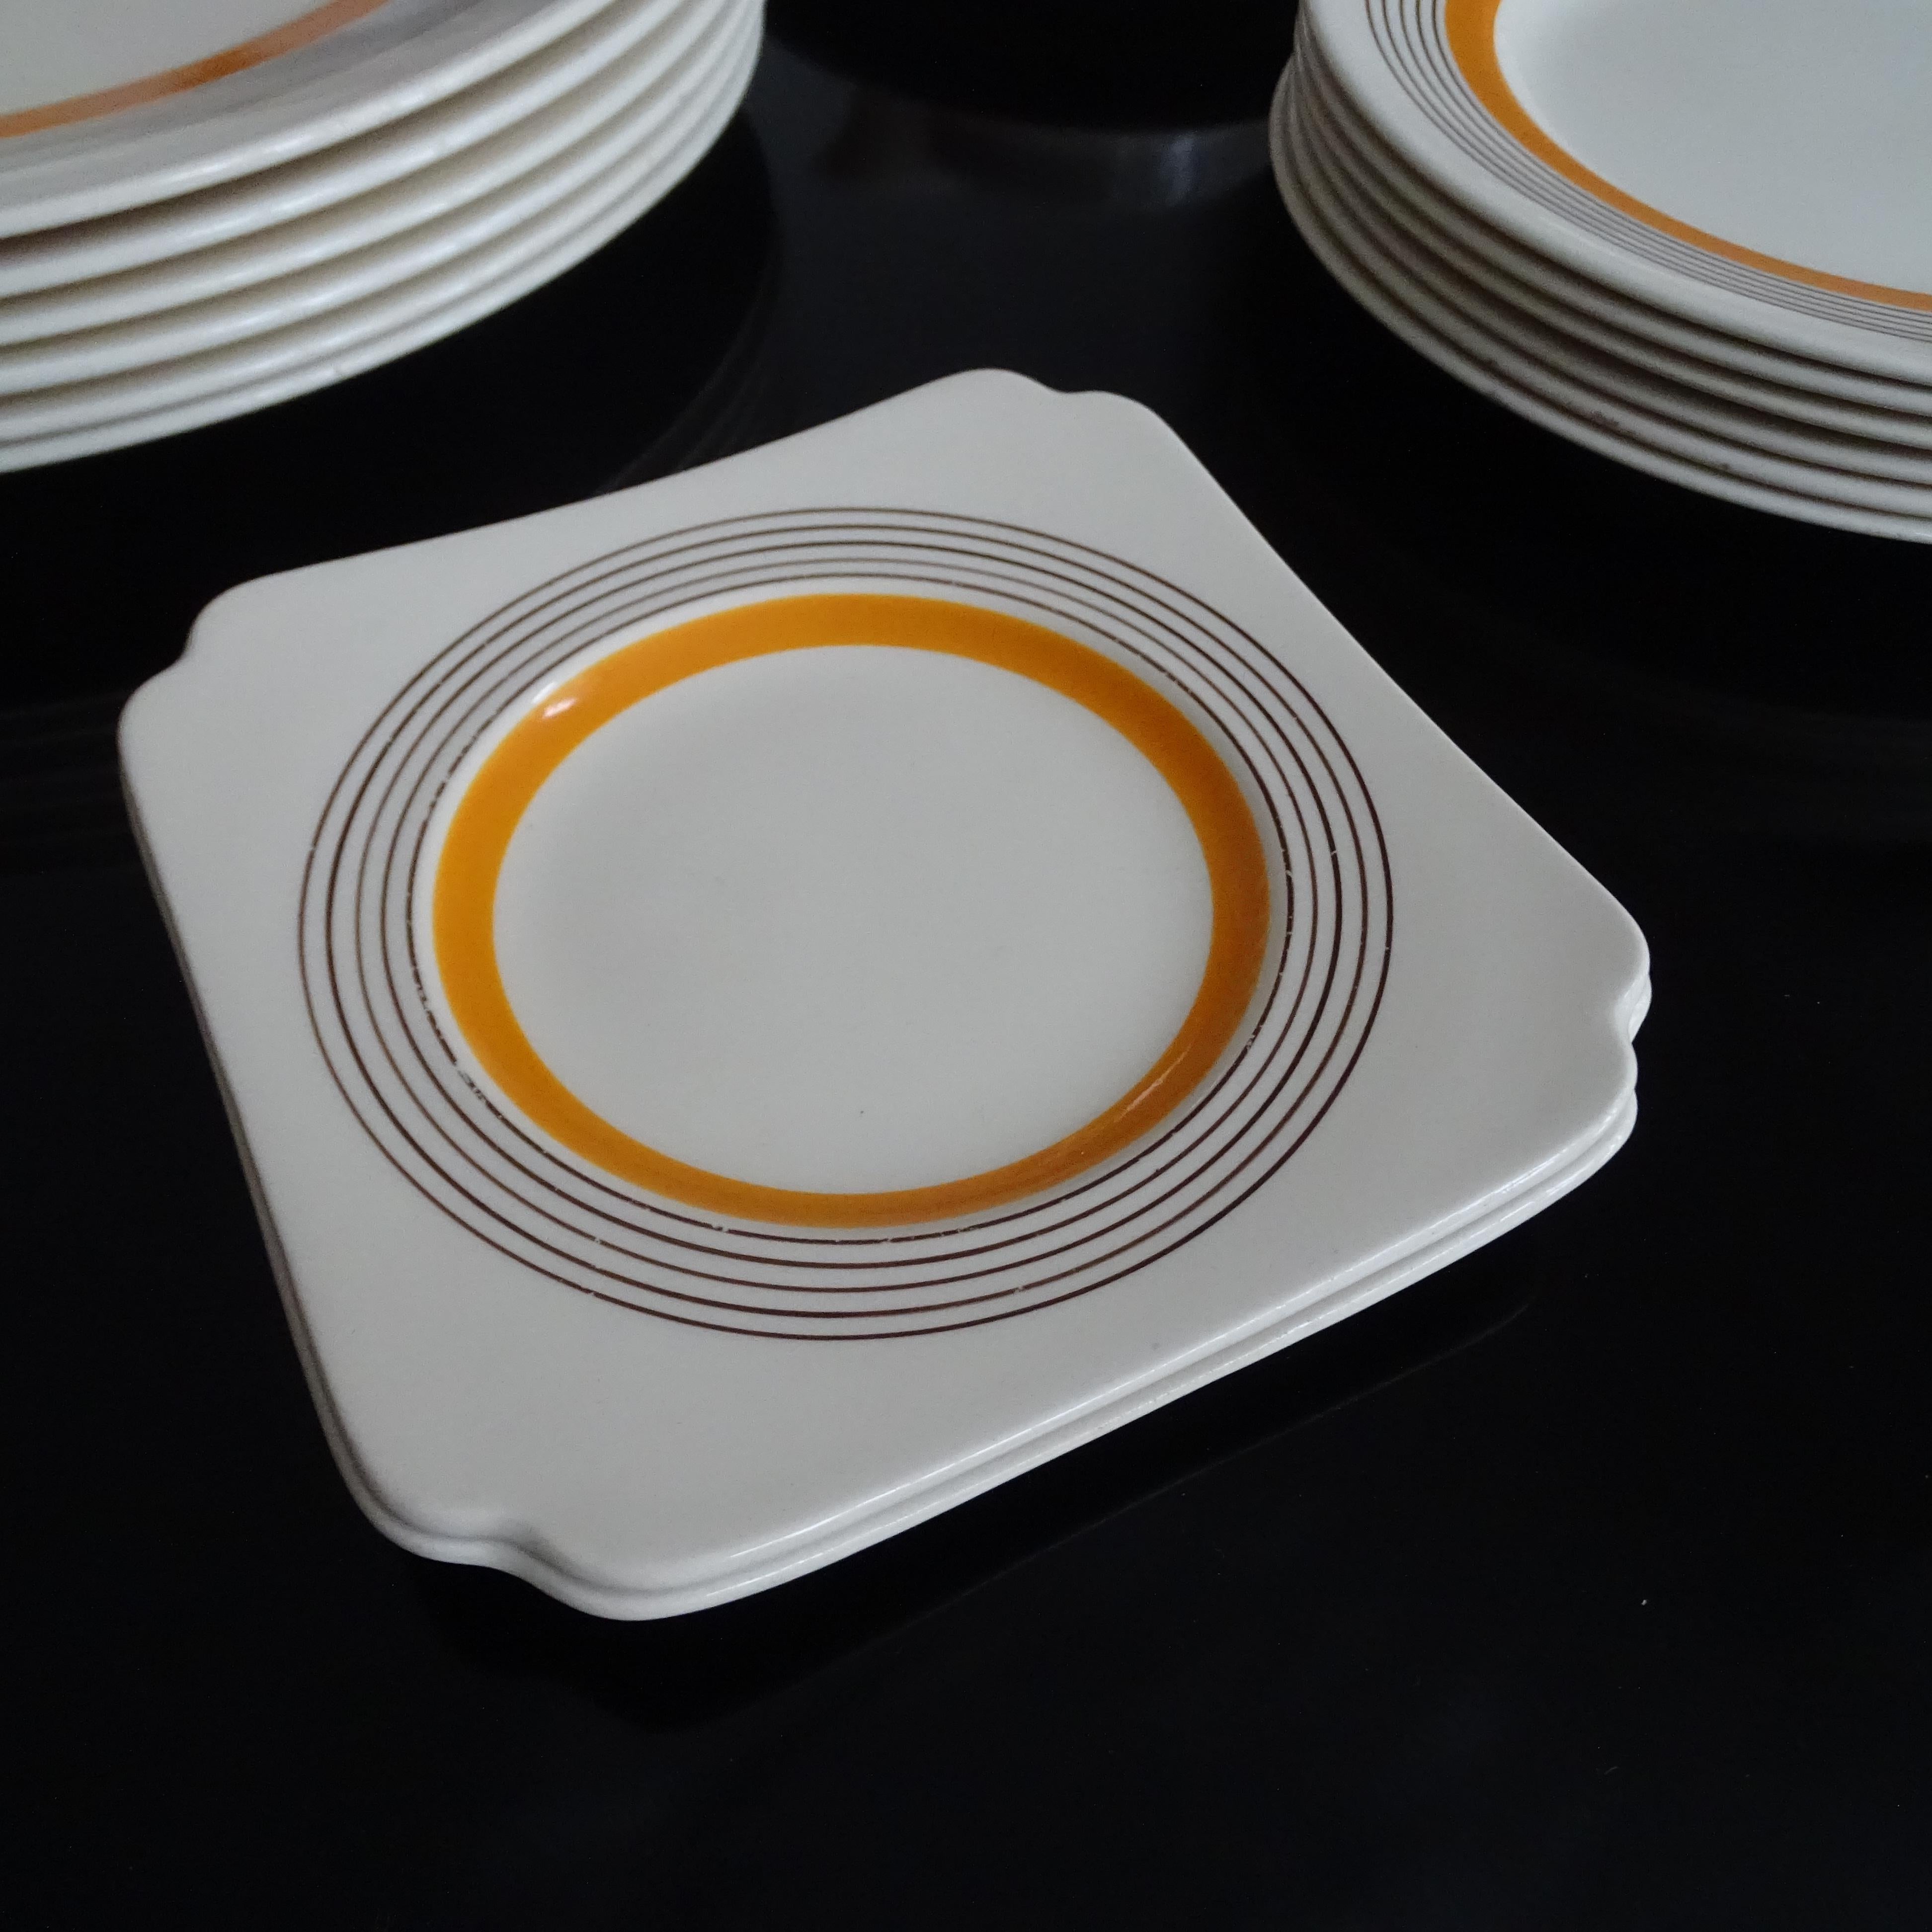 Art Deco Modernist 27-Pcs Royal Doulton England China Dinnerware Service For Sale 10